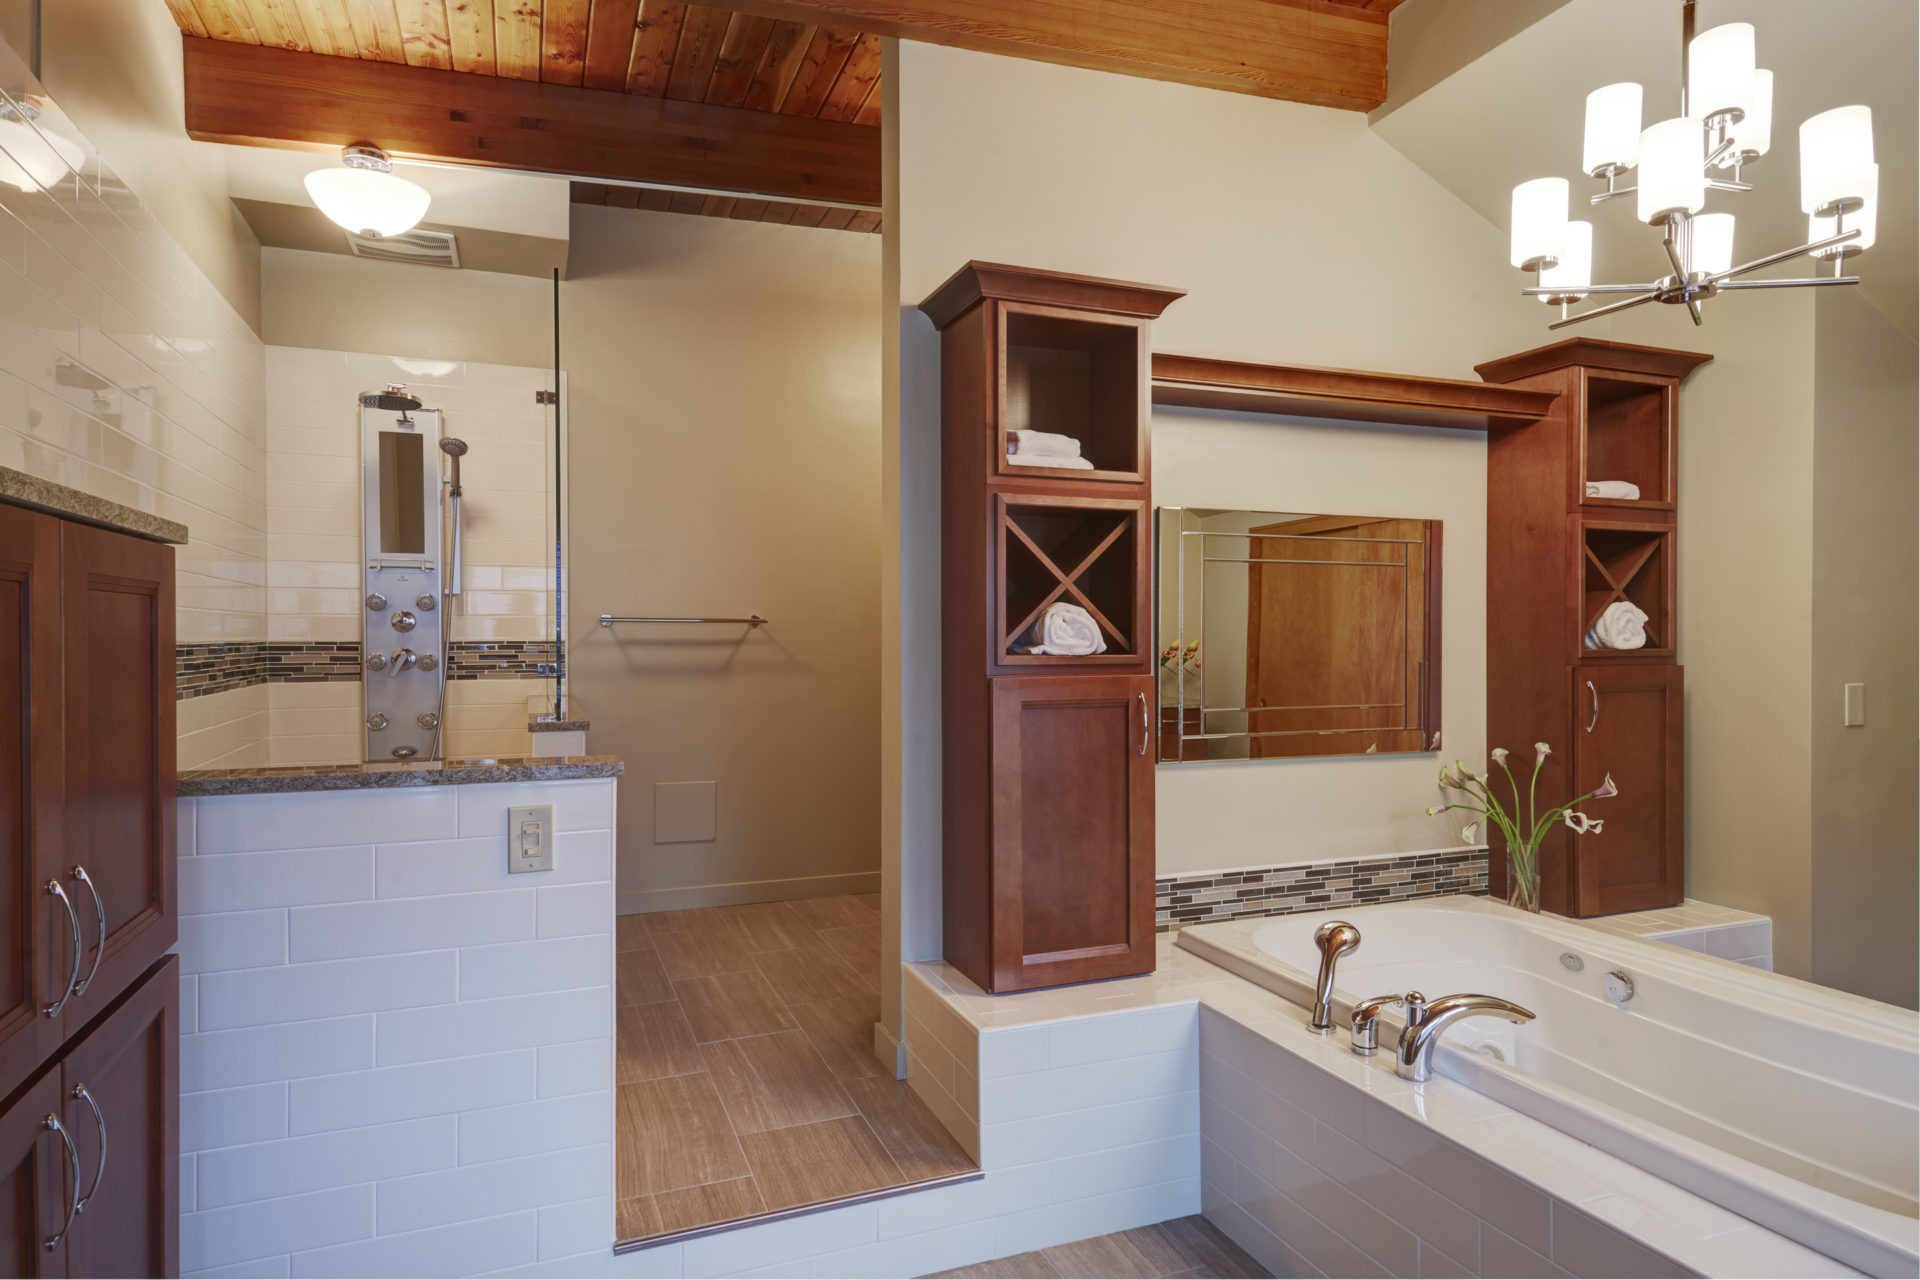 Spa Master Bathroom
 Spa like master bath retreat – Dream Kitchens